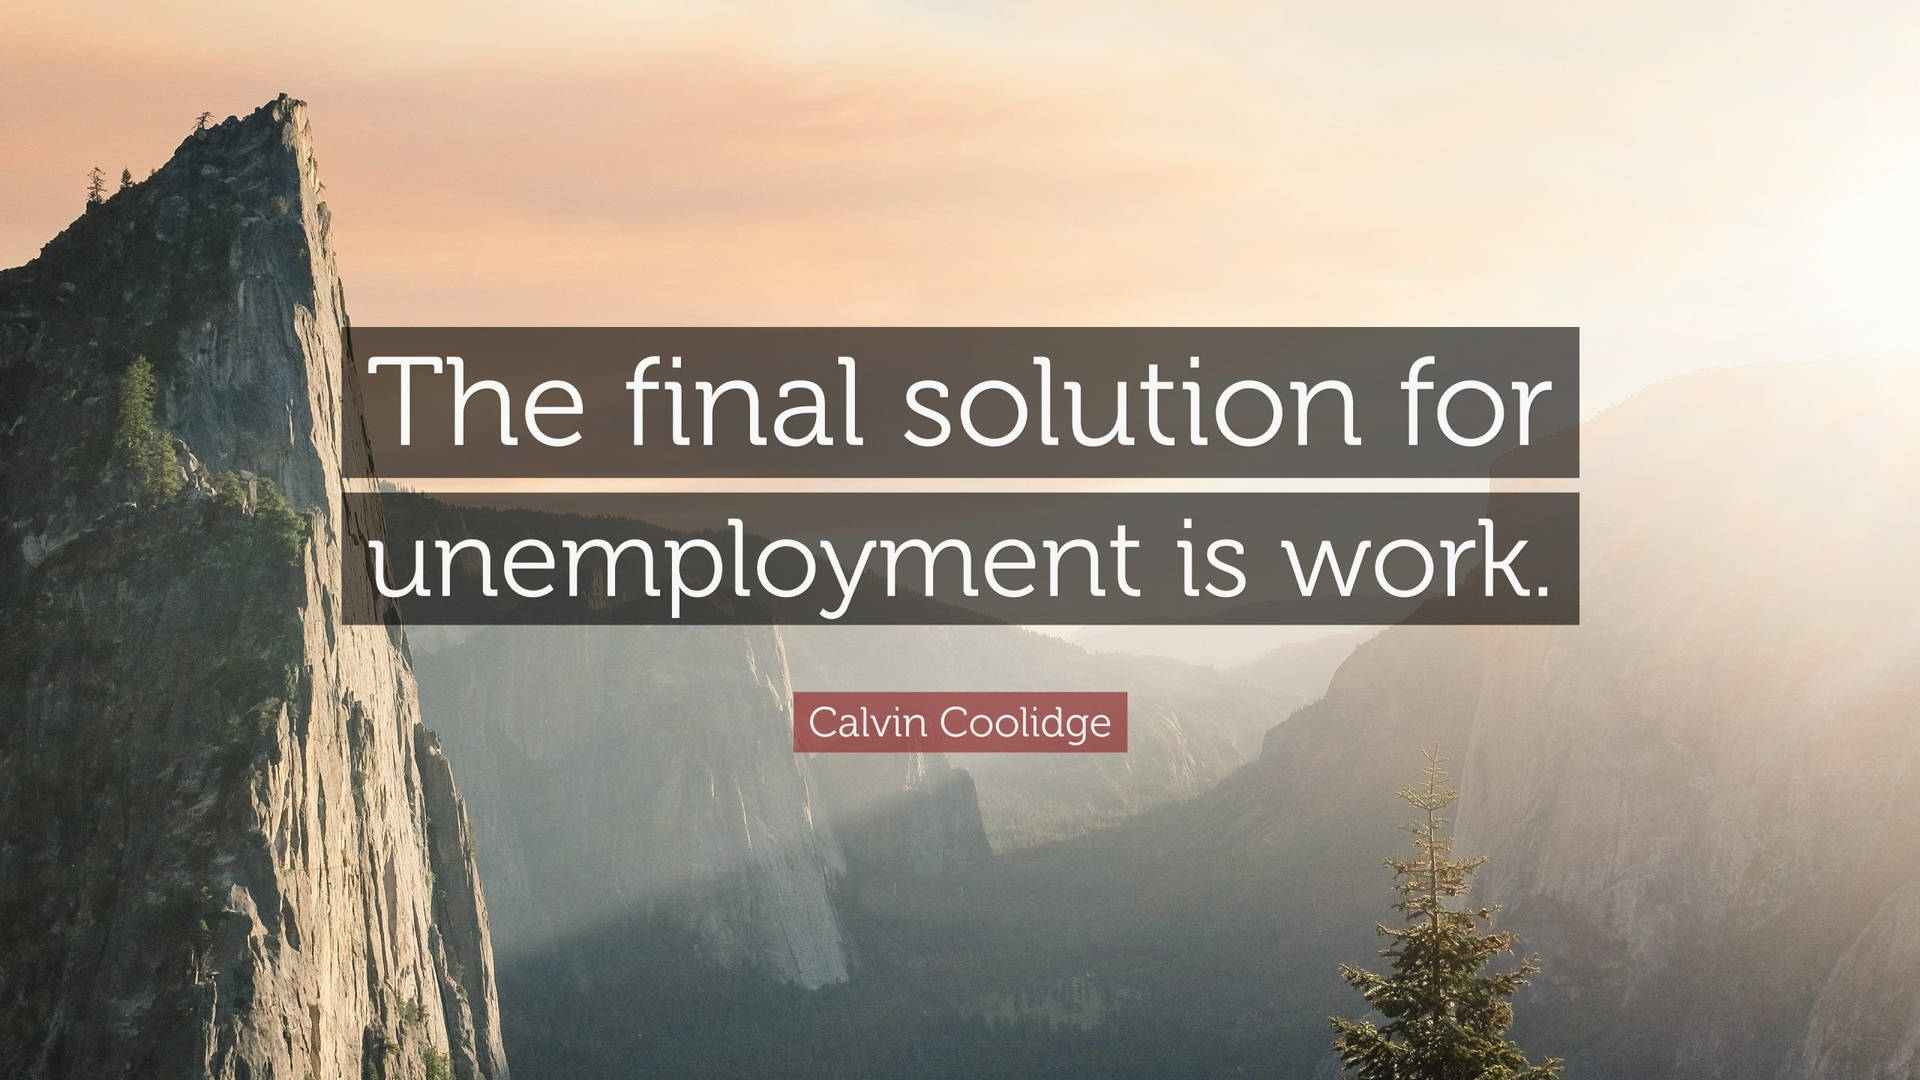 Calvin Coolidge Quote About Unemployment Wallpaper